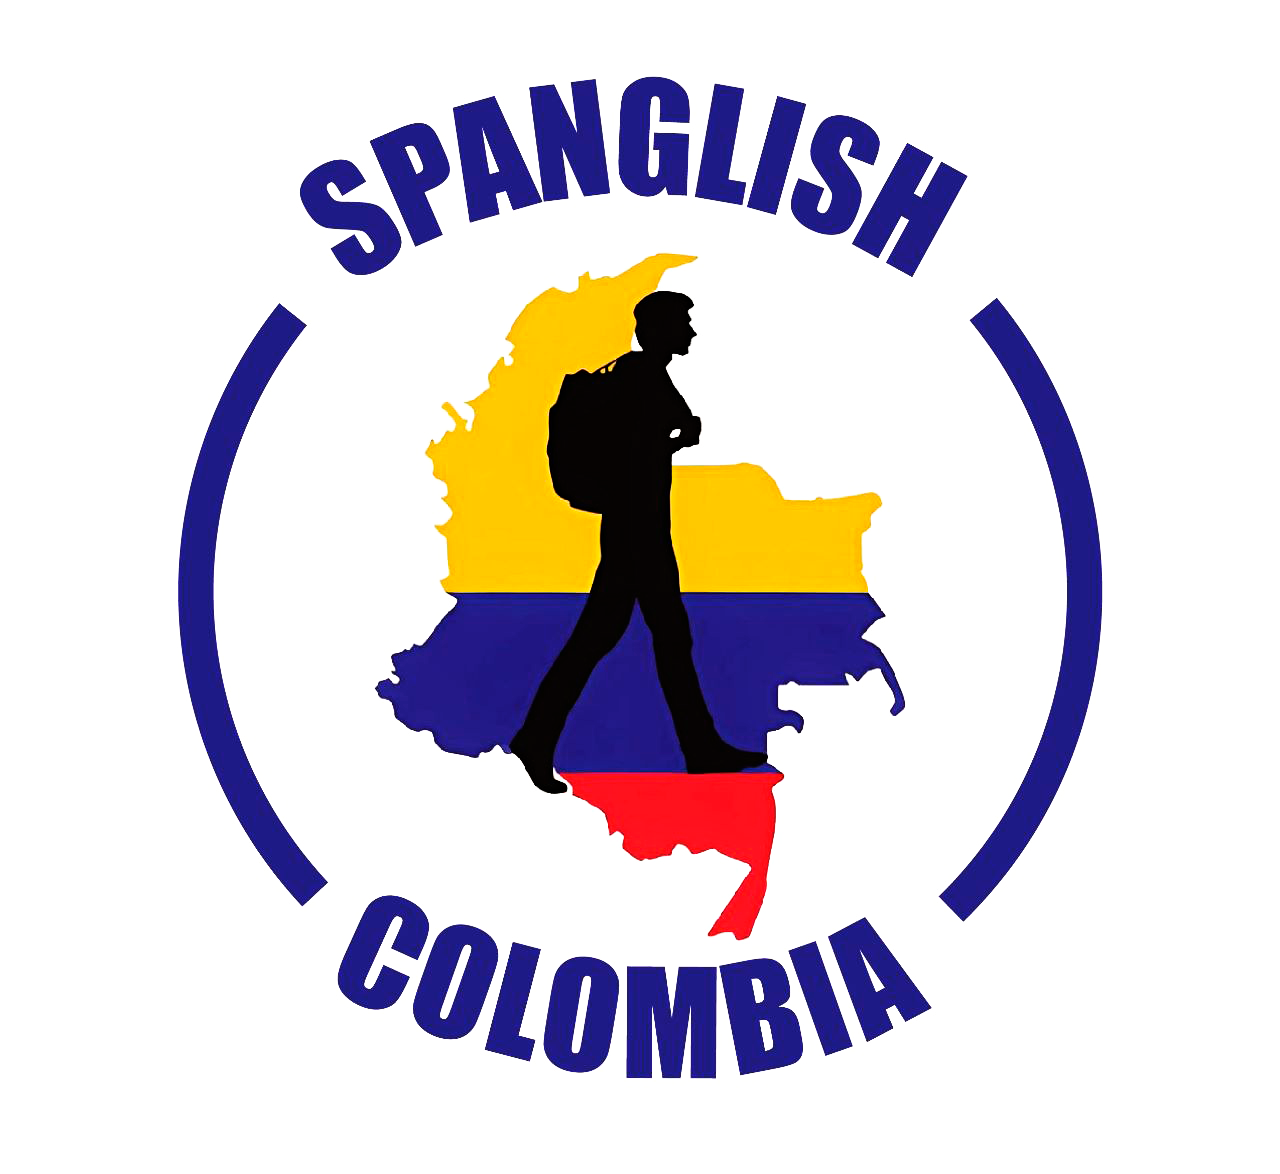 Spanglish Colombia